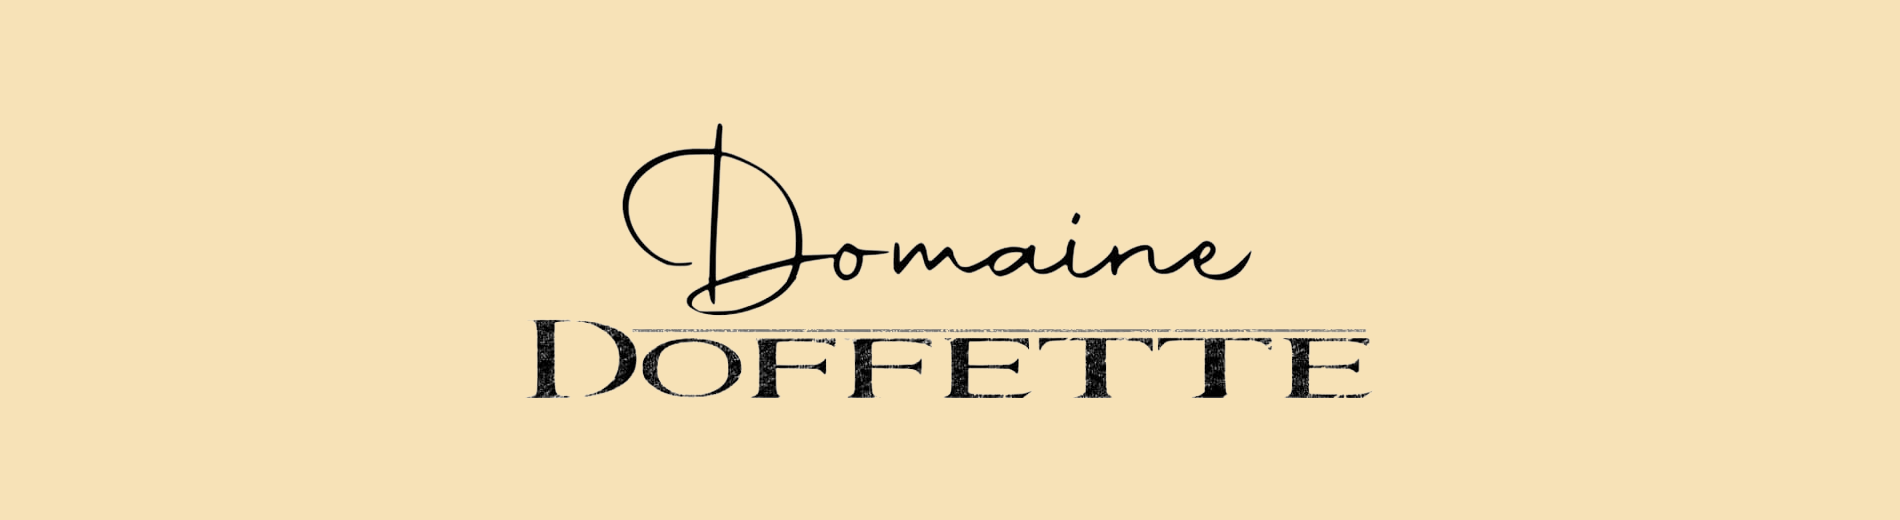 Domaine Doffette logo